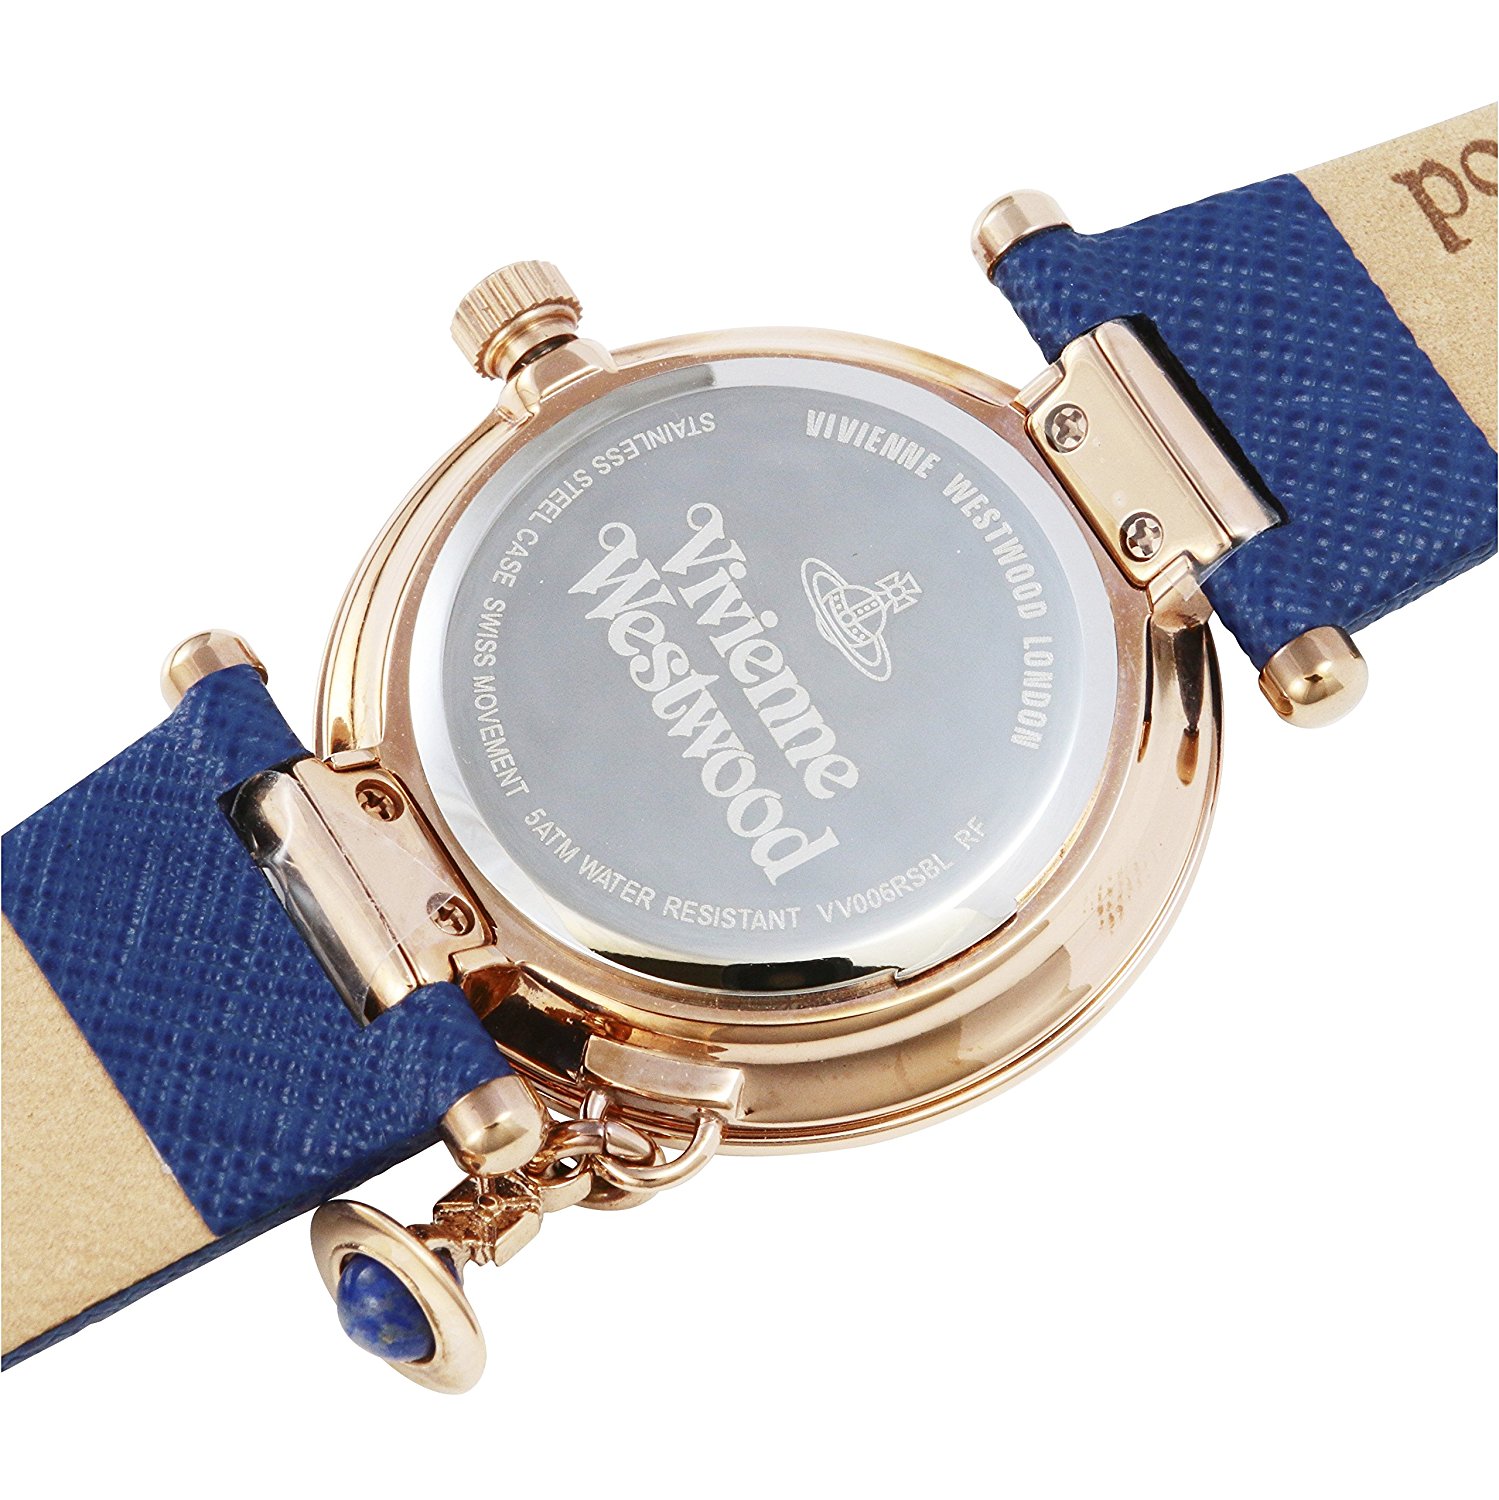 【Vivienne Westwood】 腕時計 シルバー文字盤 クォーツ お揃いがおすすめ |開業・開店・移転祝いにWebカタログギフト